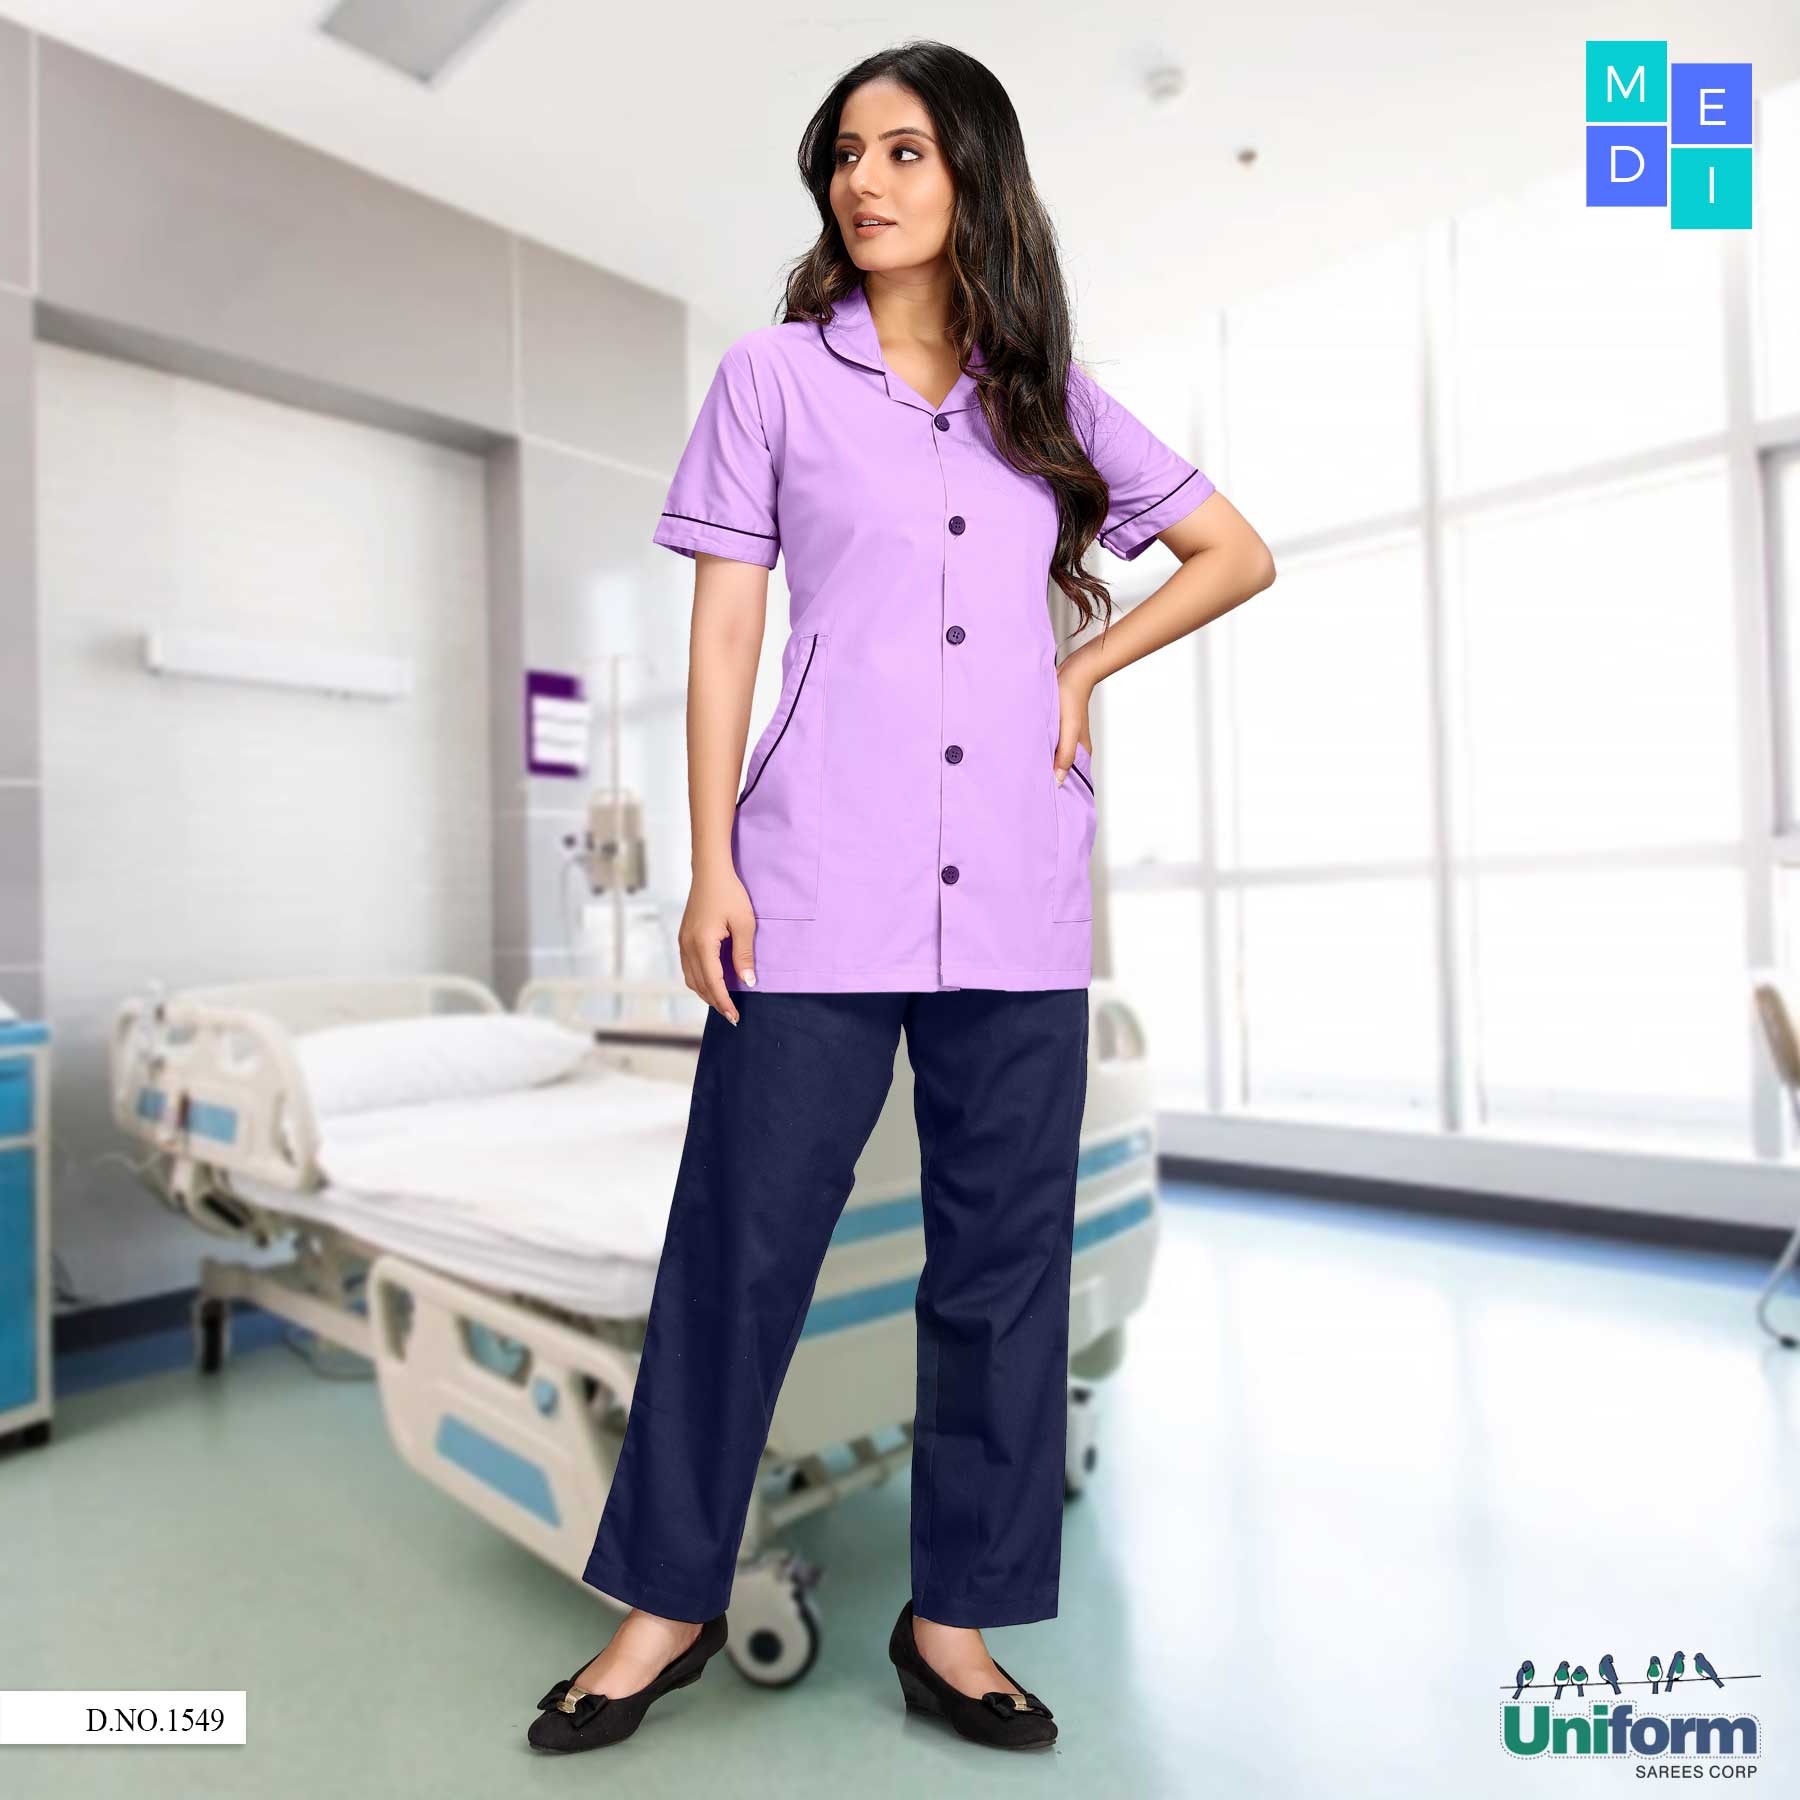 Lavender And Navy Blue Hospital Uniform For Nurses, Clinic Uniforms